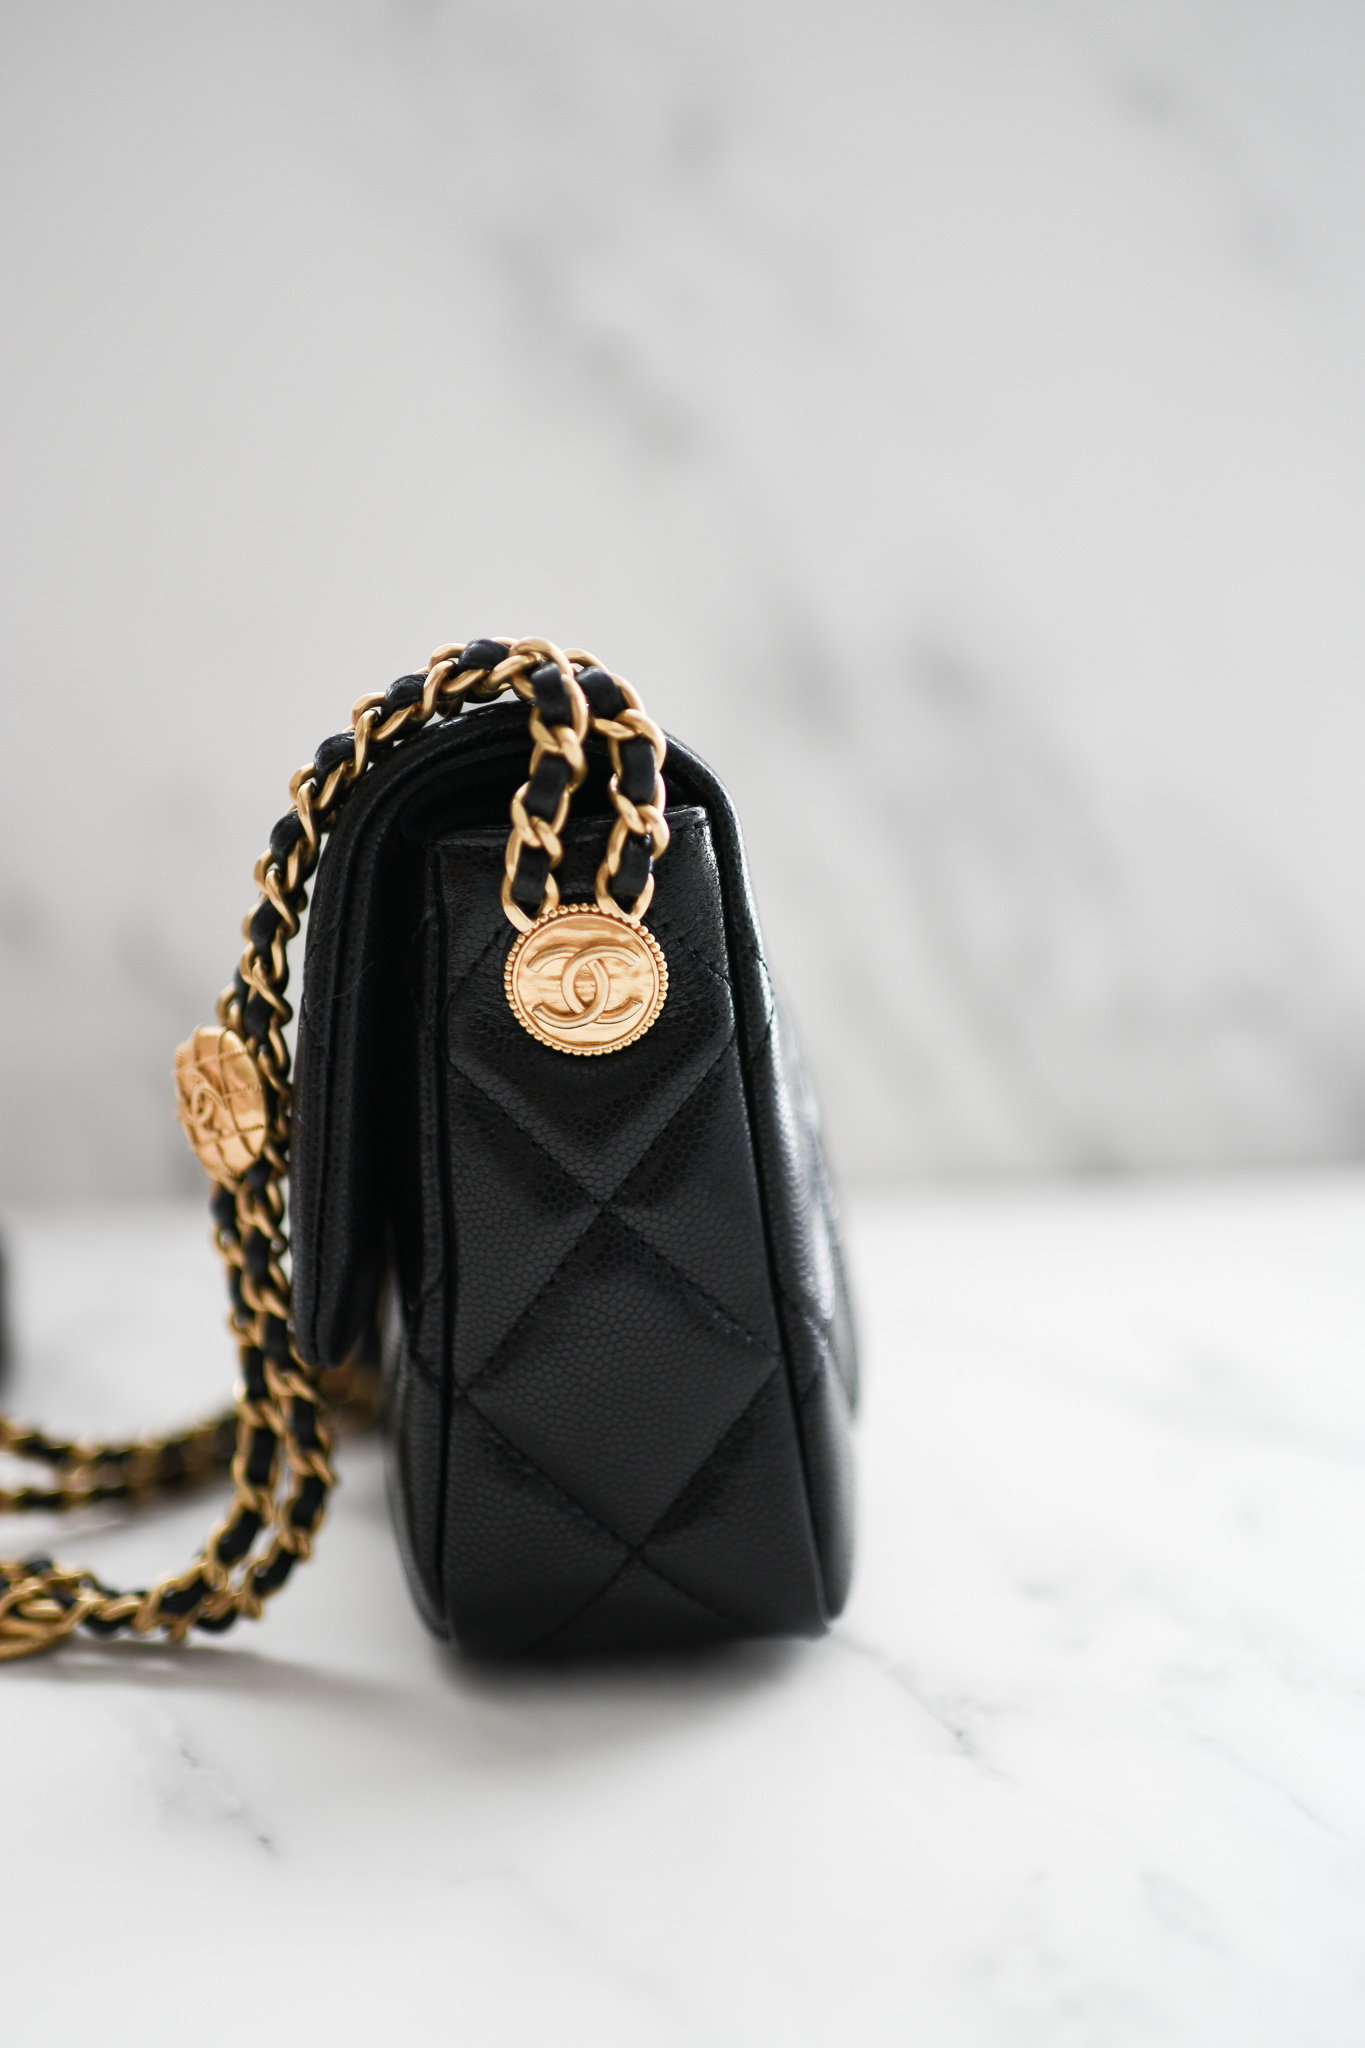 Chanel Seasonal Coin Flap Bag, Black Caviar with Gold Hardware, New in Box  GA002